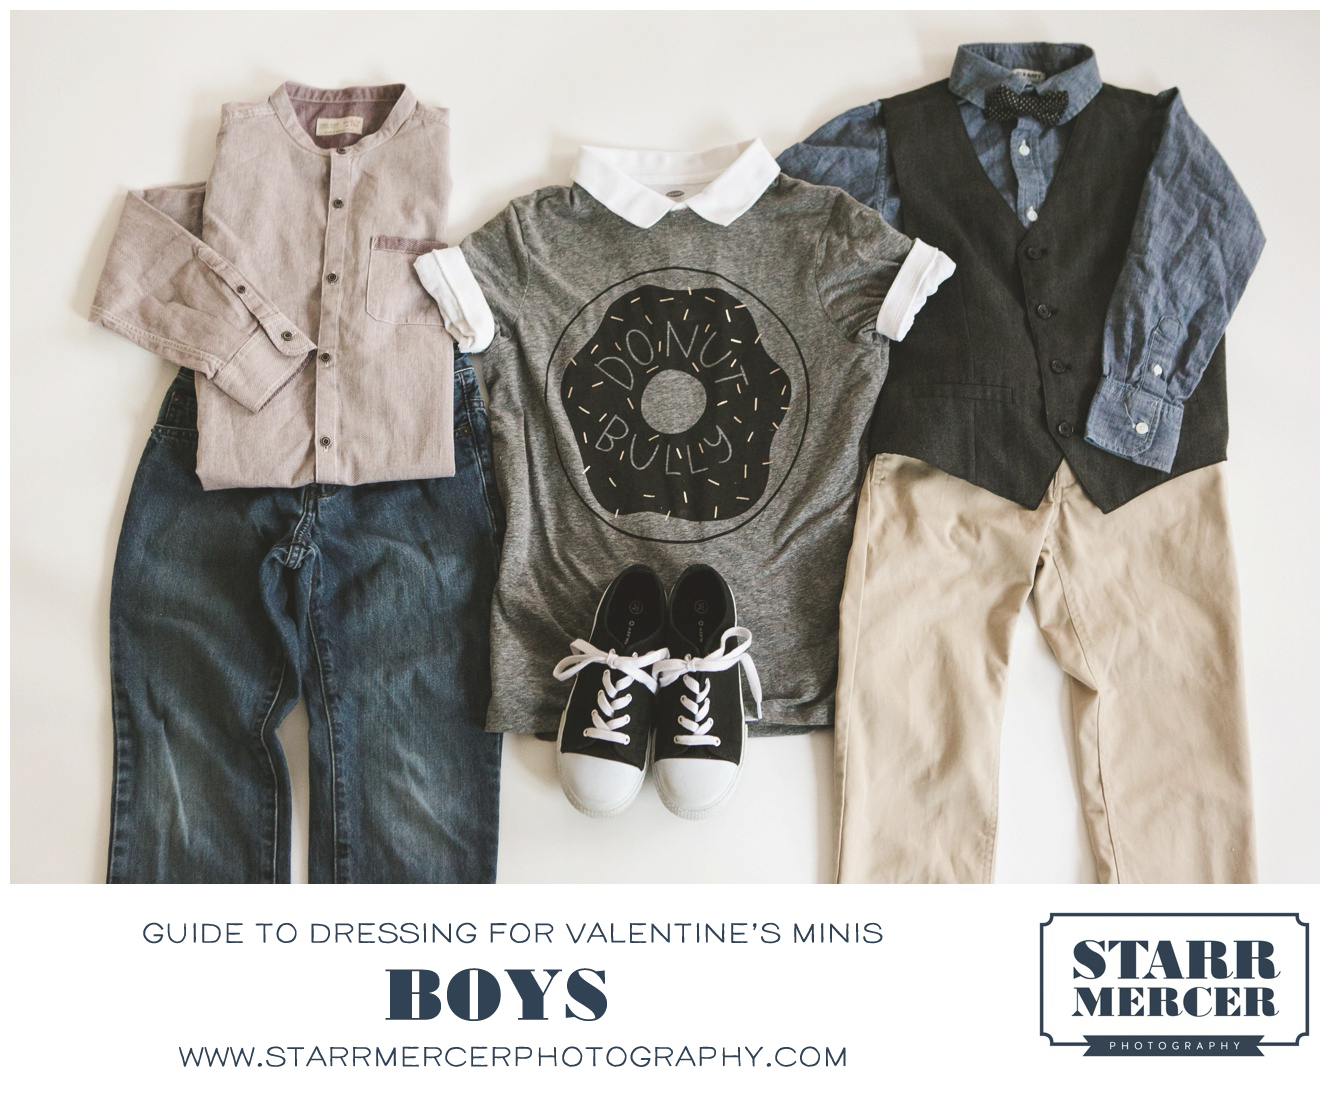 Boys Valentine's wardrobe inspiration from Gap, Zara, Old Navy and Joe Fresh photo